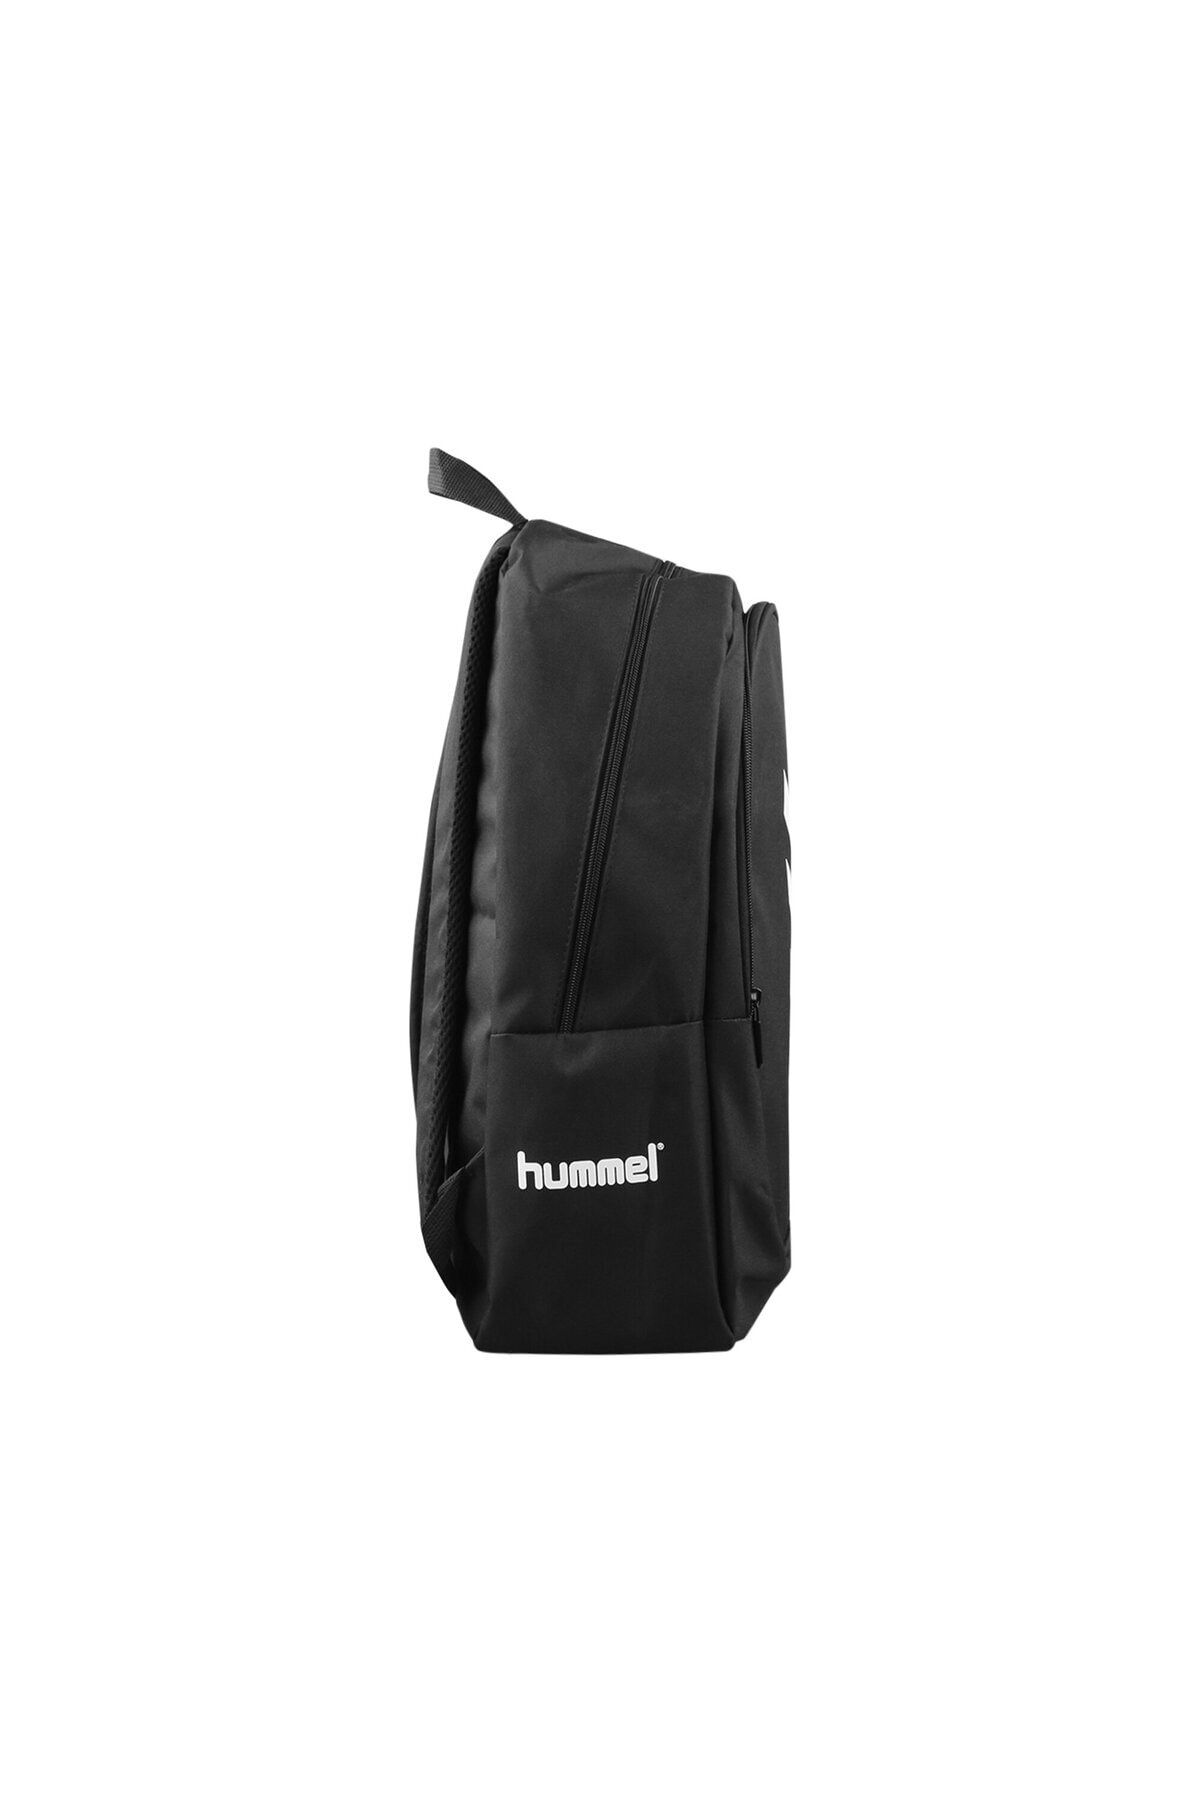 hummel HML Davido Back Pack Backpack 980270-2001 سیاه